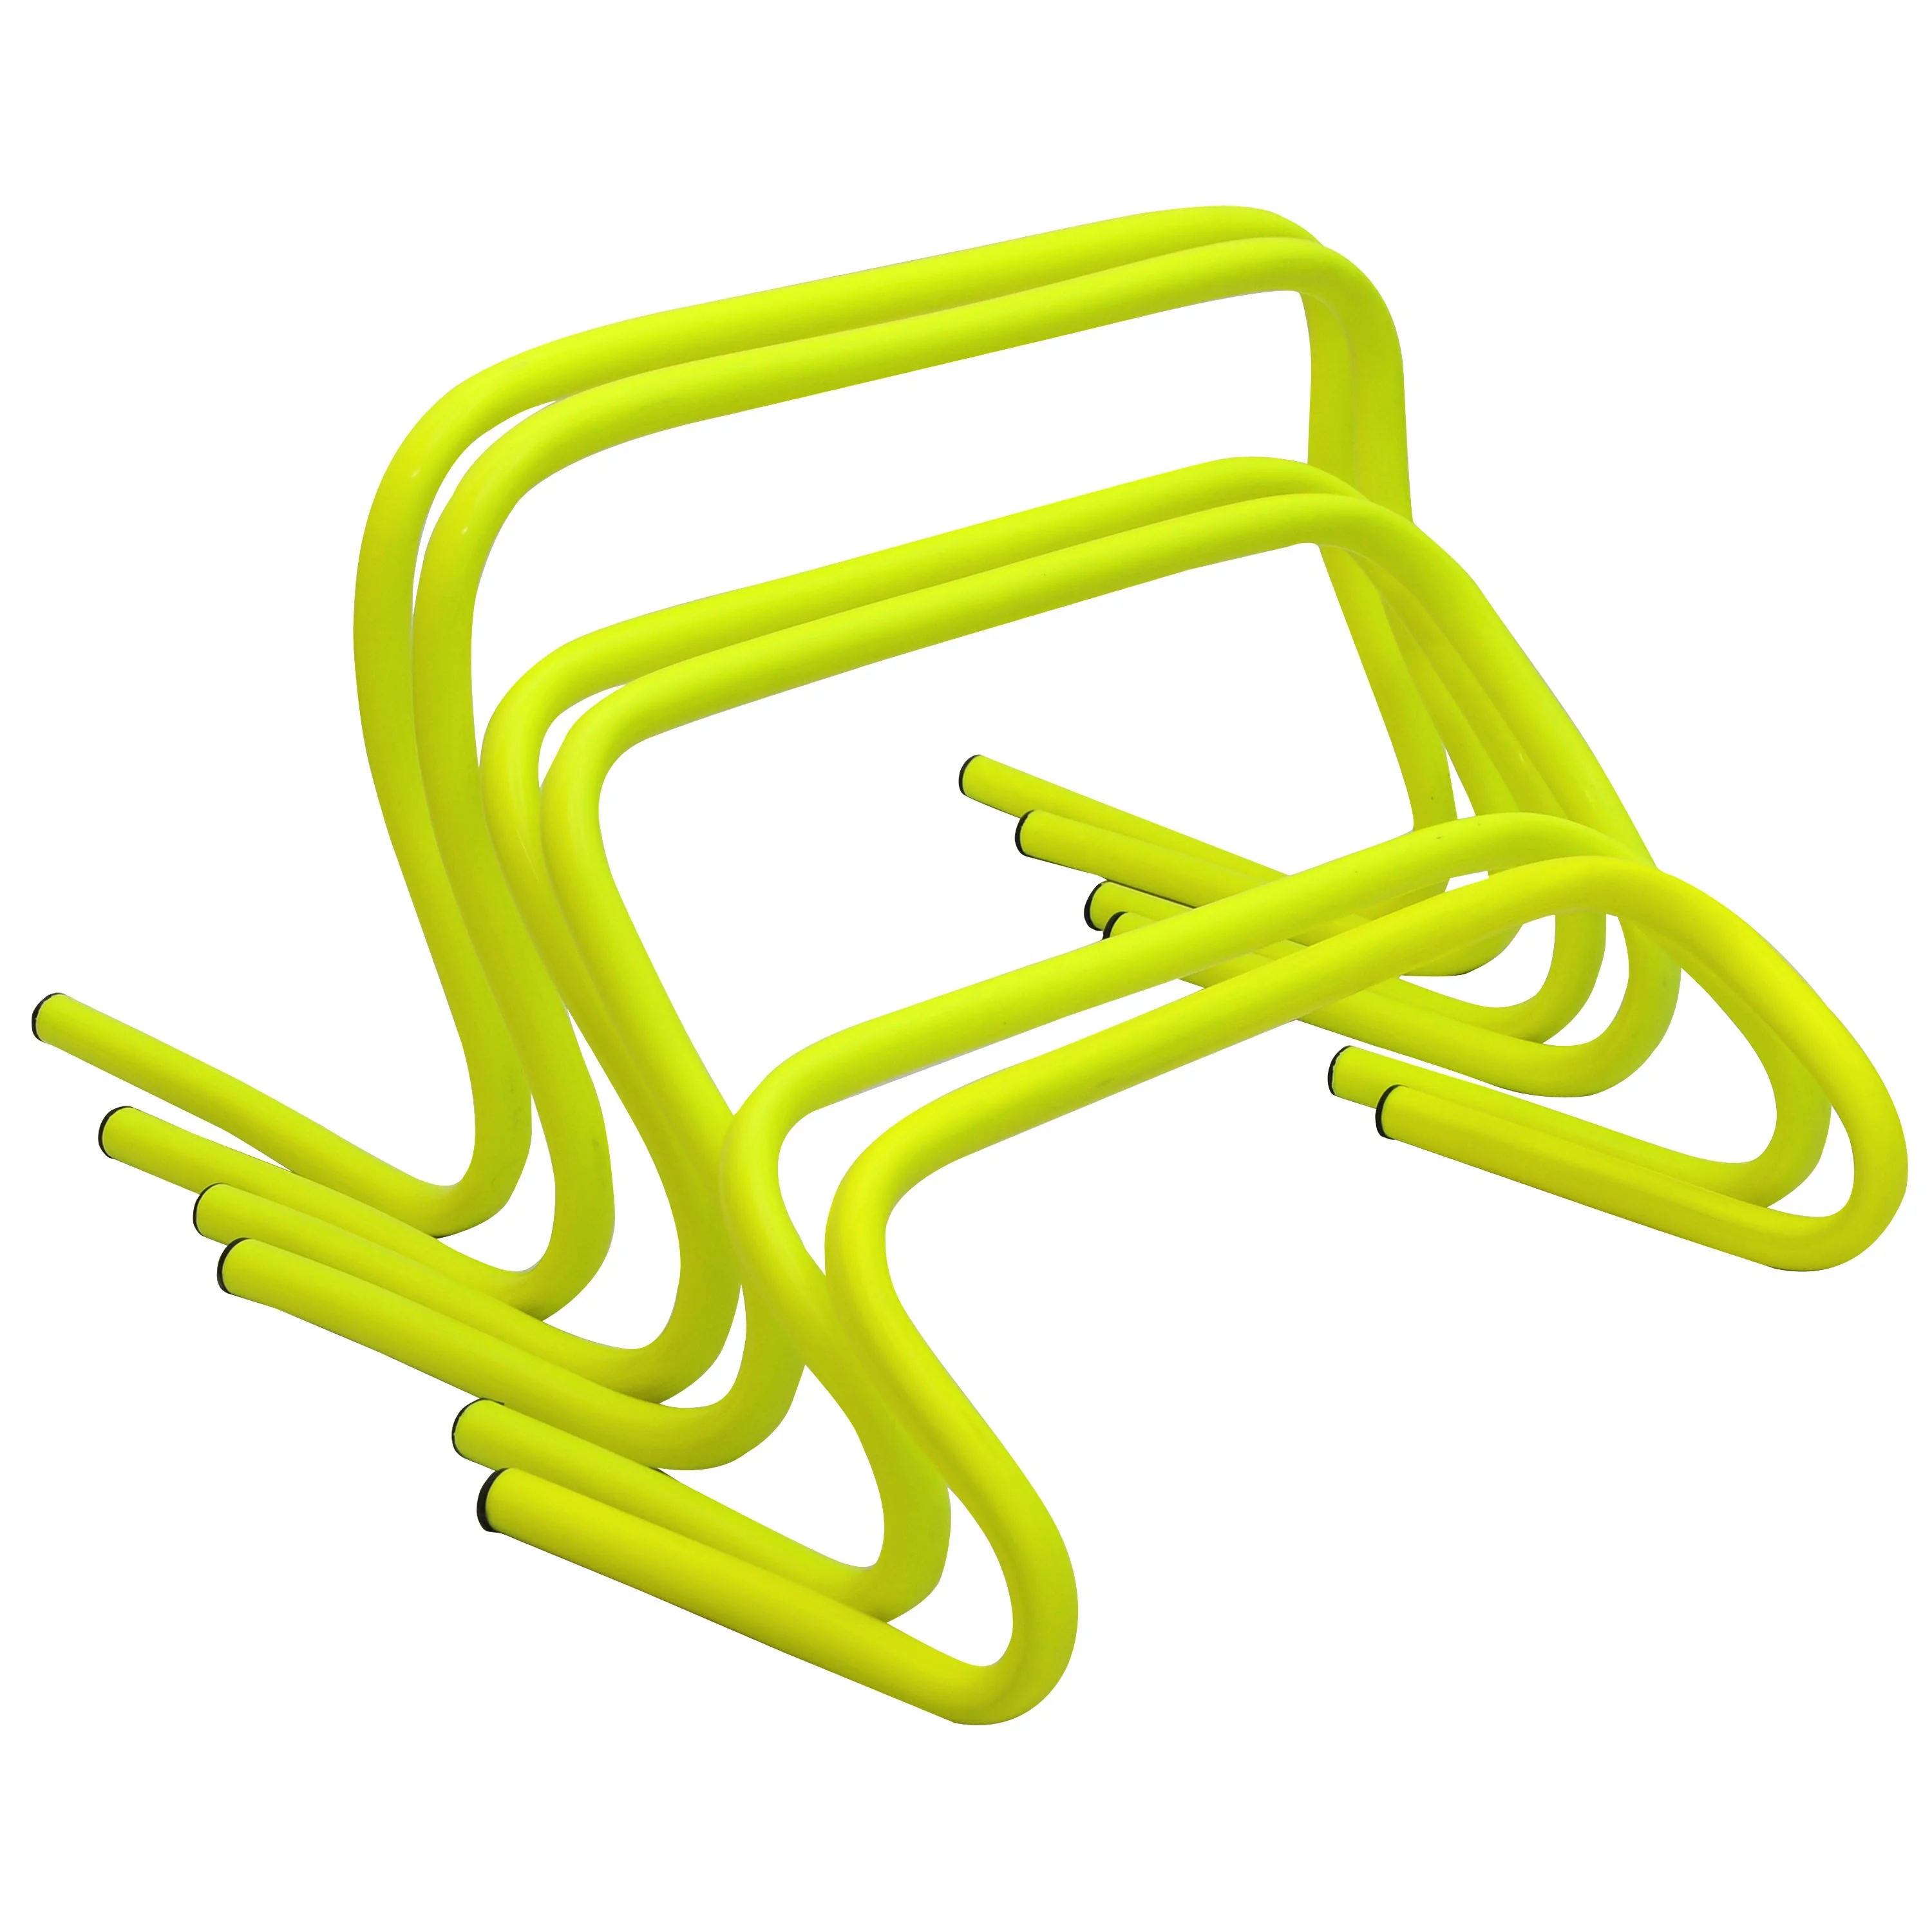 Feileng Adjustable Height Speed Training Hurdle Set Soccer Agility Green Set of 4 